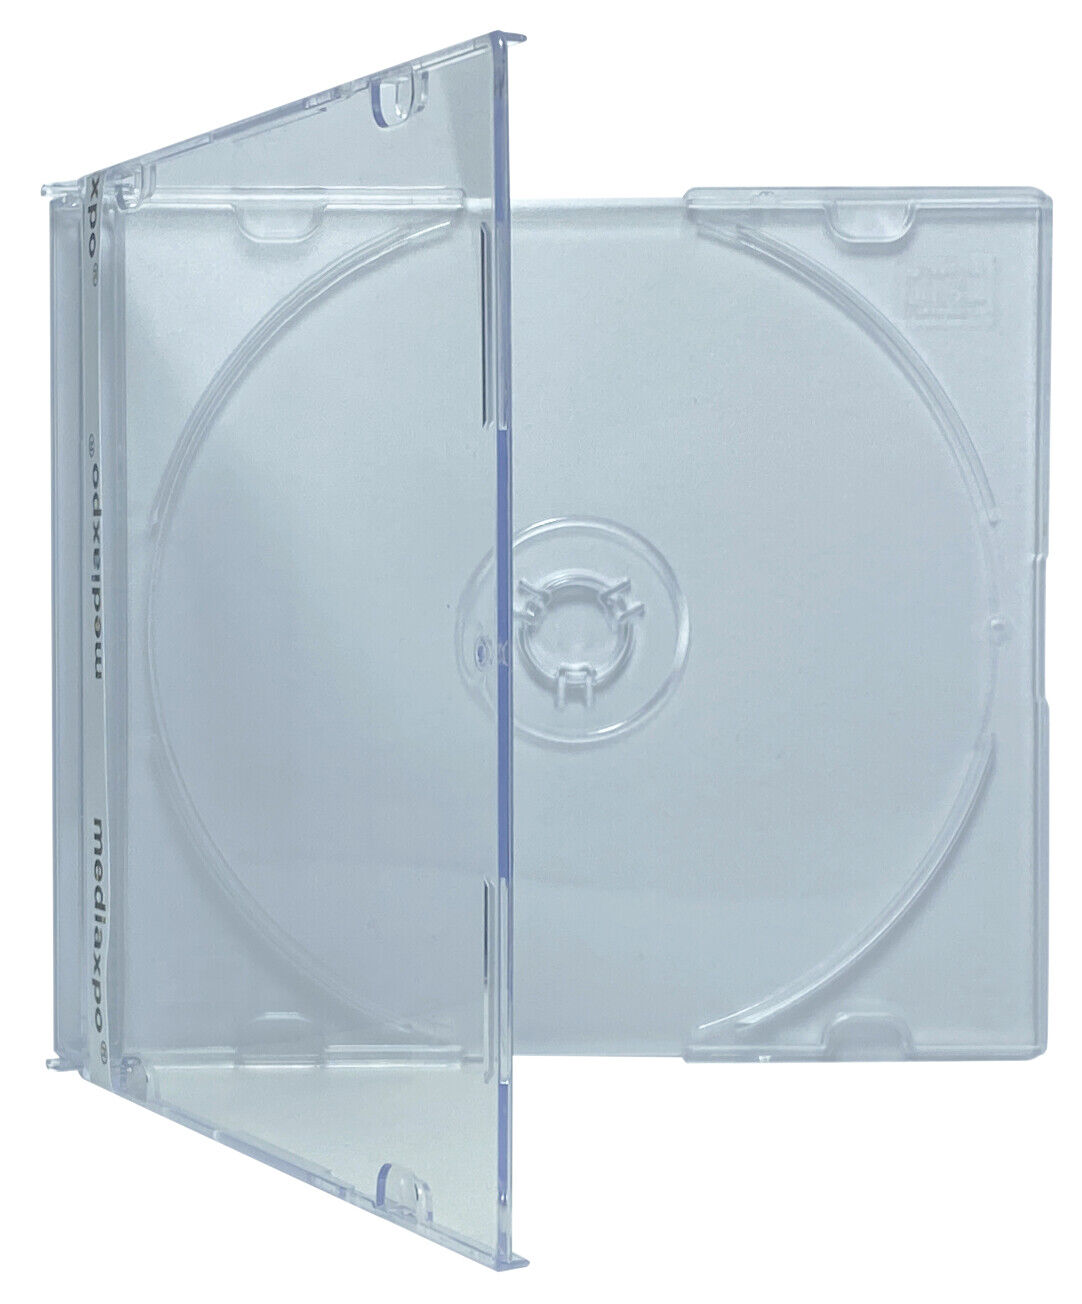 SLIM Clear CD Jewel Cases Lot